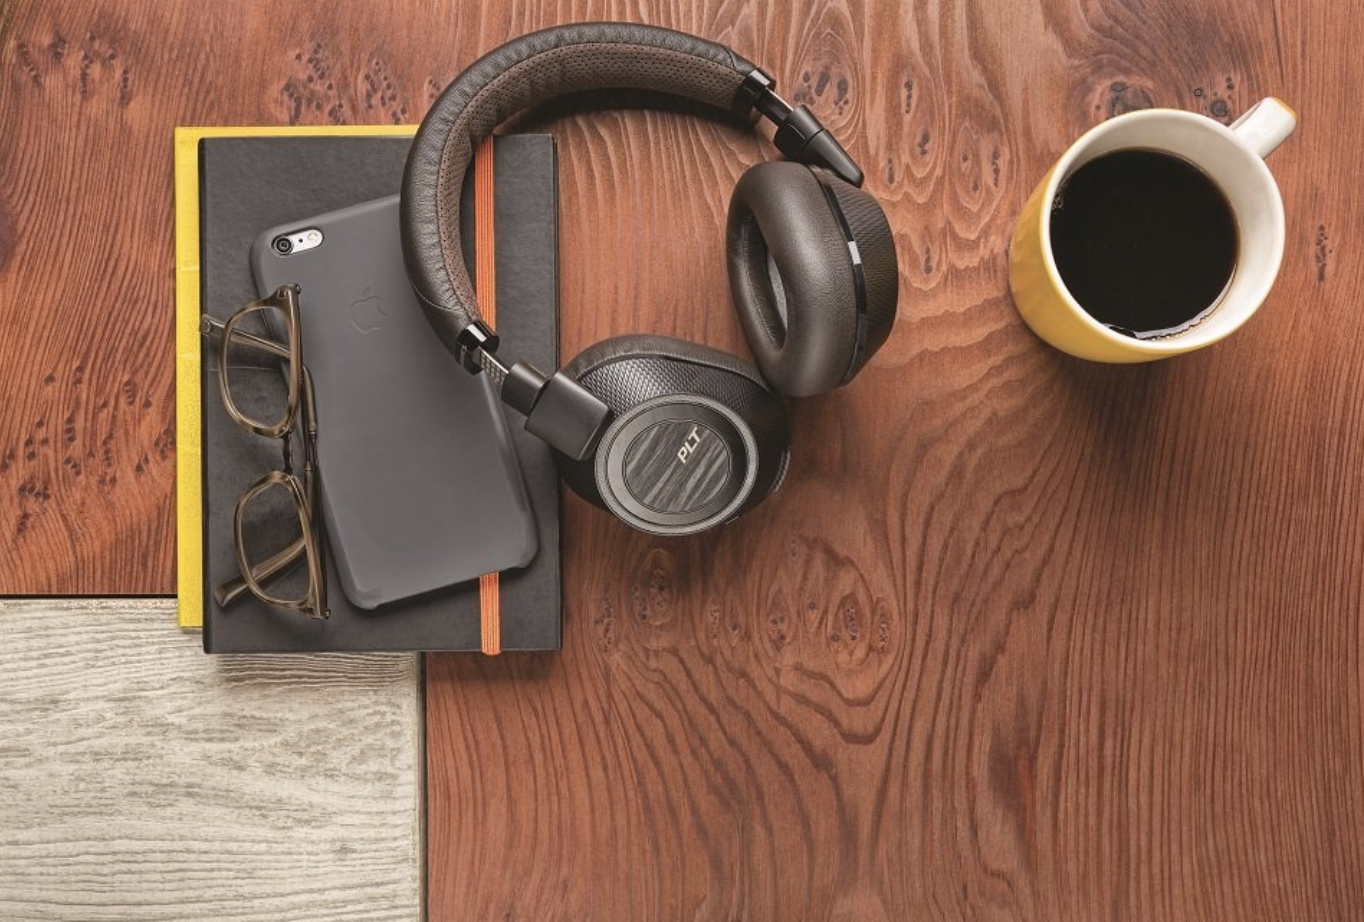 sleek black headphones on wooden table next to bullet journal and coffee